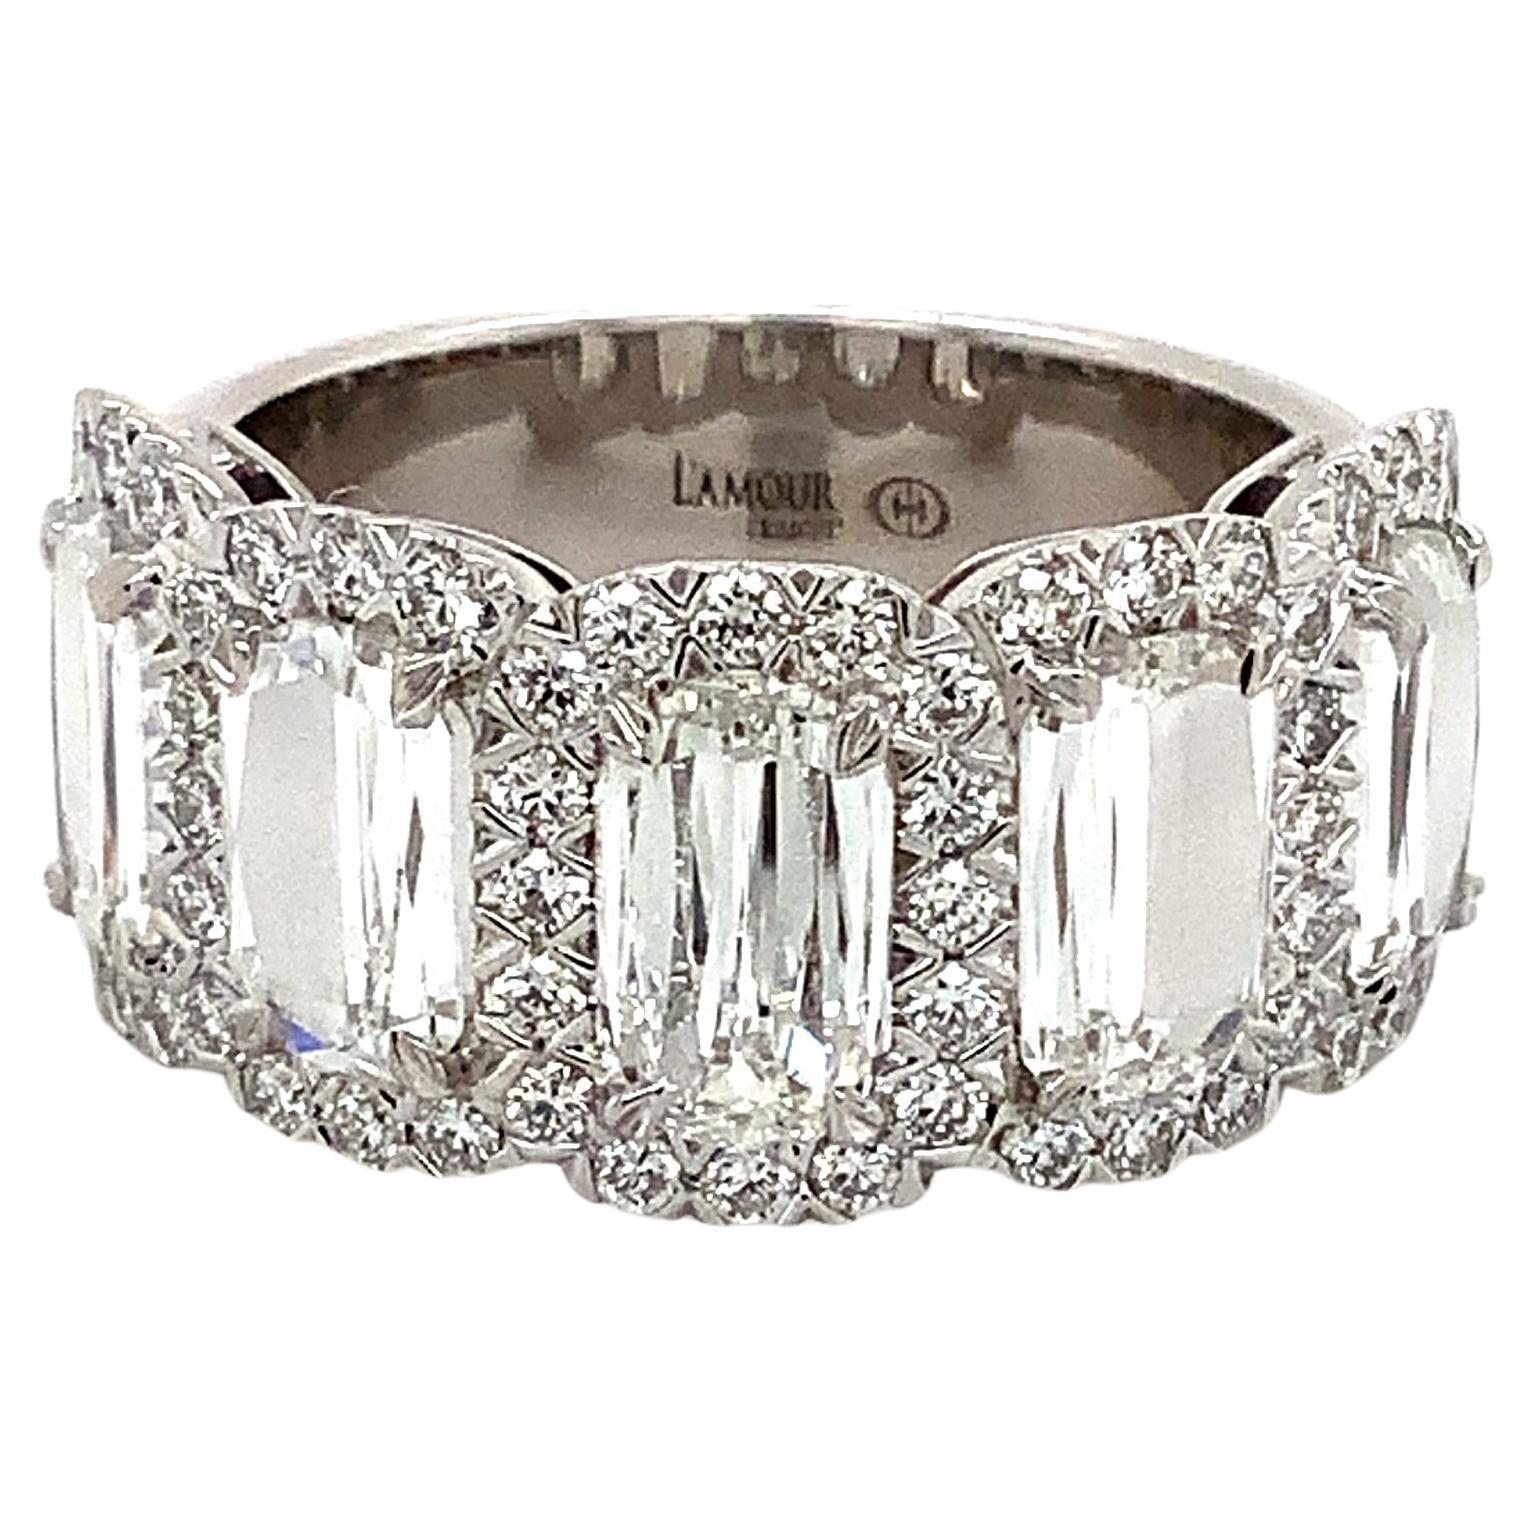 Christopher Designs L'Amour Crisscut 5 Stone Halo Diamond Ring 18K White Gold